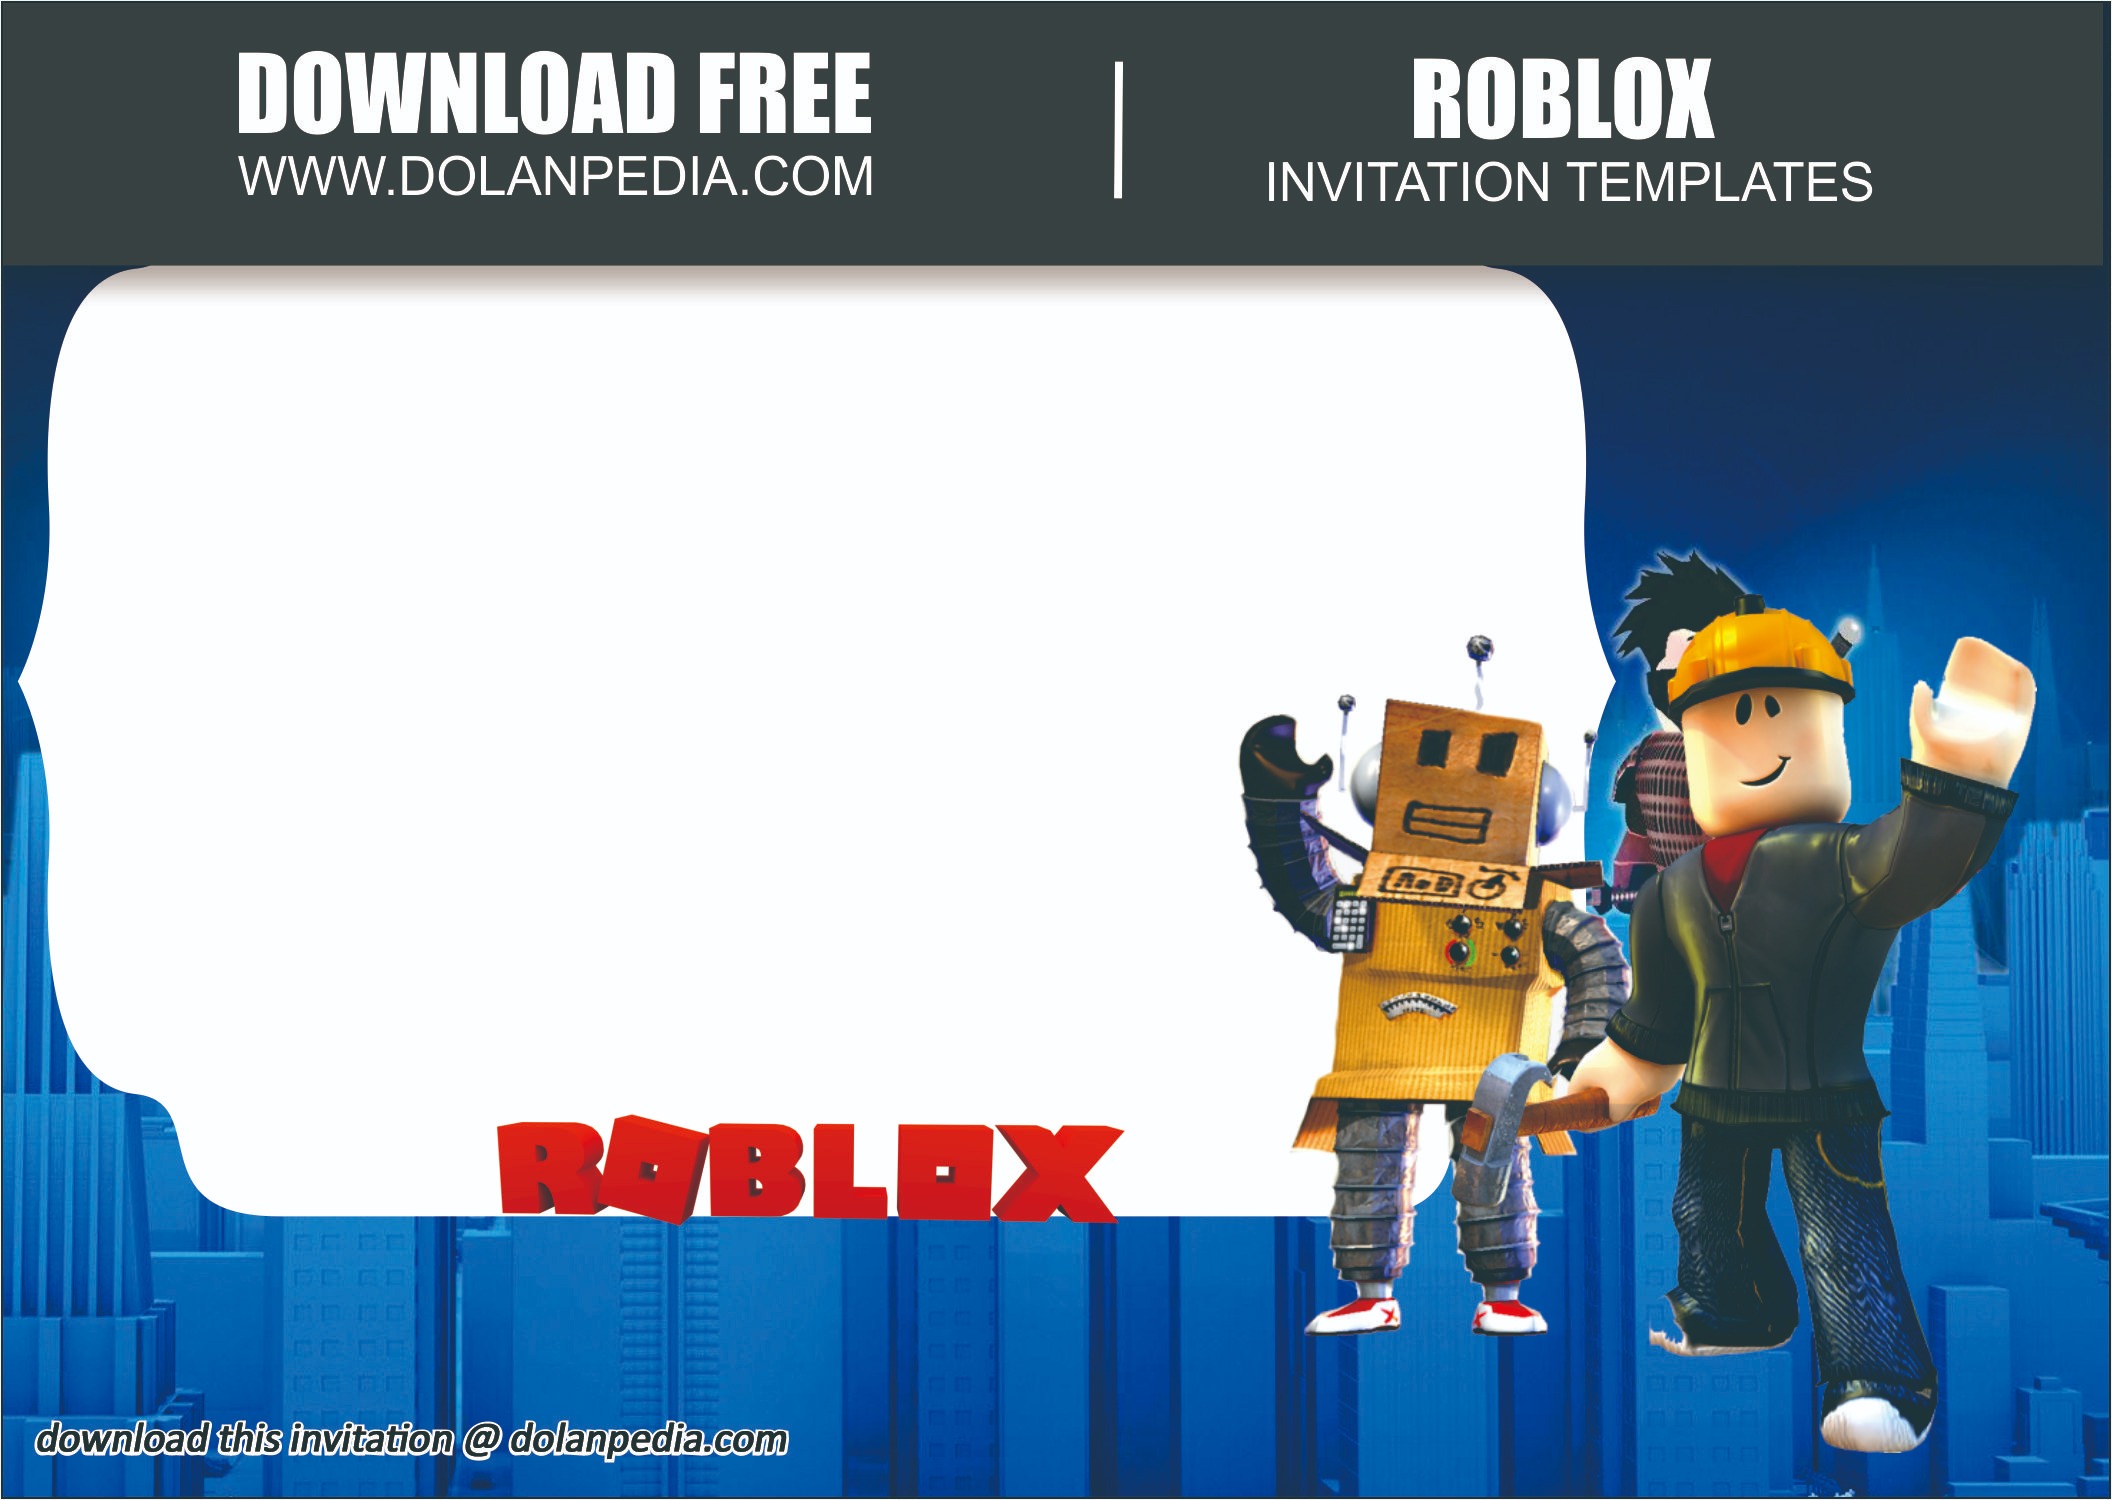 Free Printable Roblox Invitation Template Dolanpedia - free printable roblox images